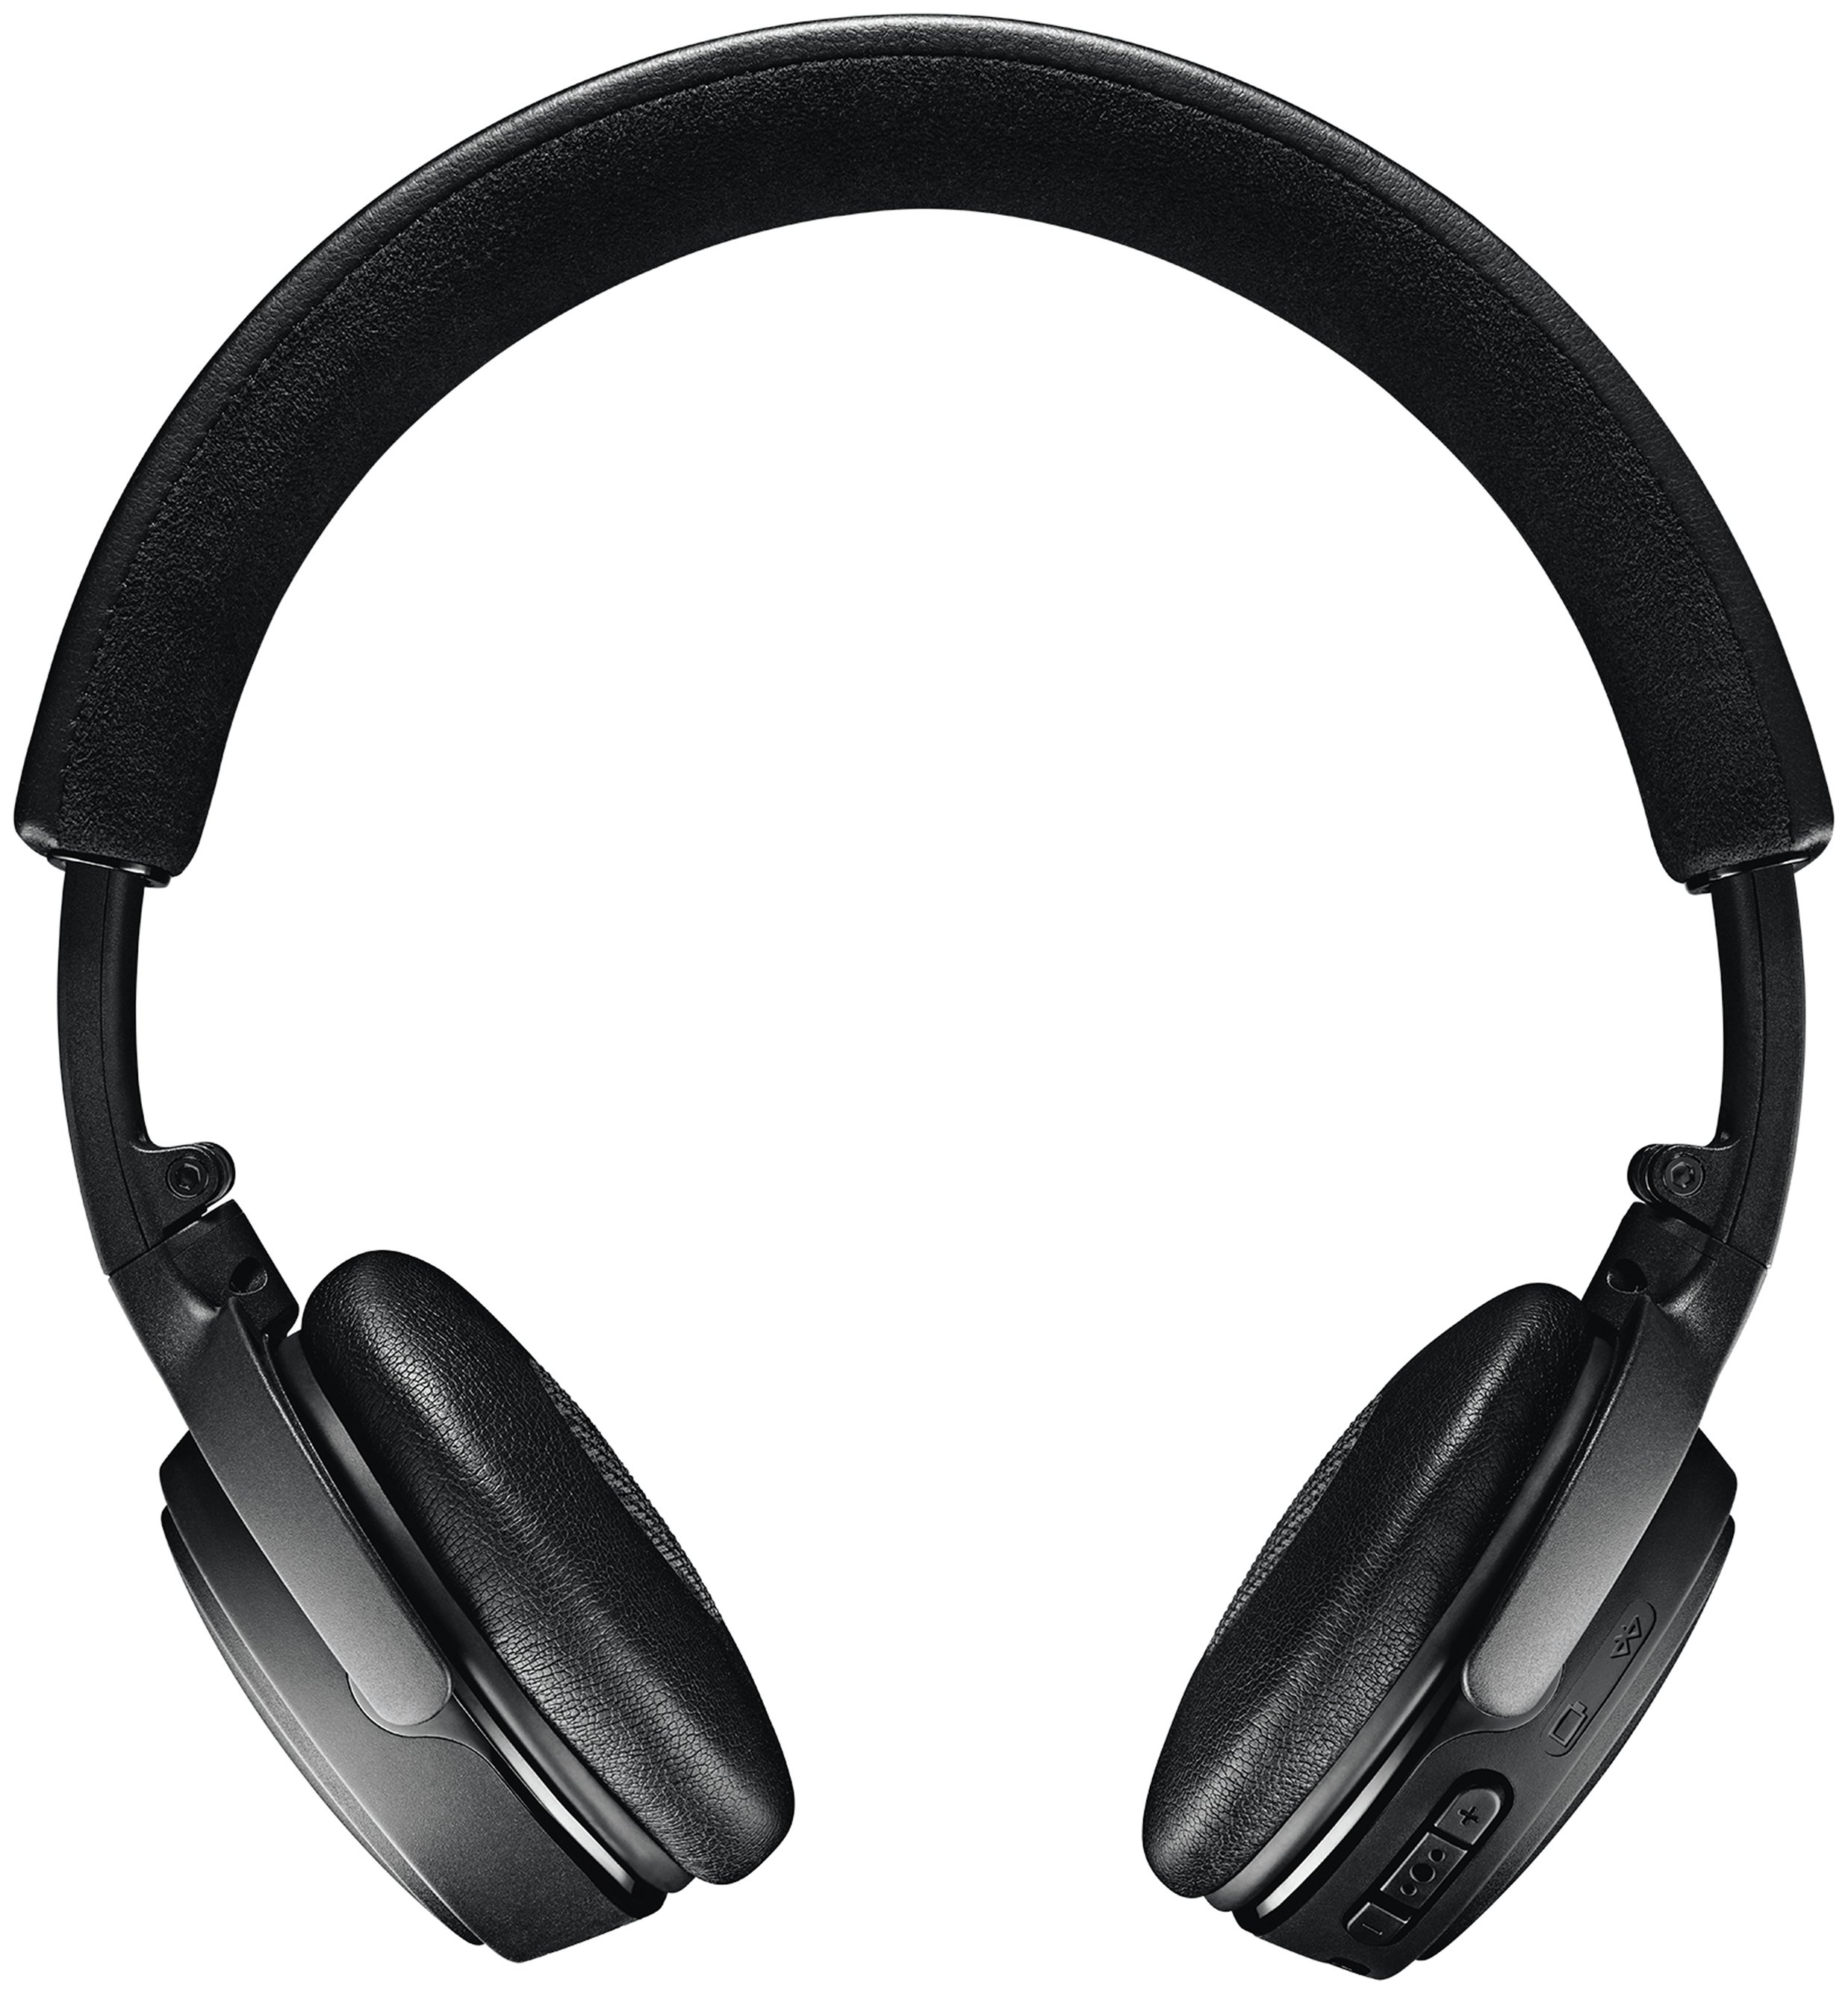 Bose Soundlink On-Ear Wireless Headphones Review